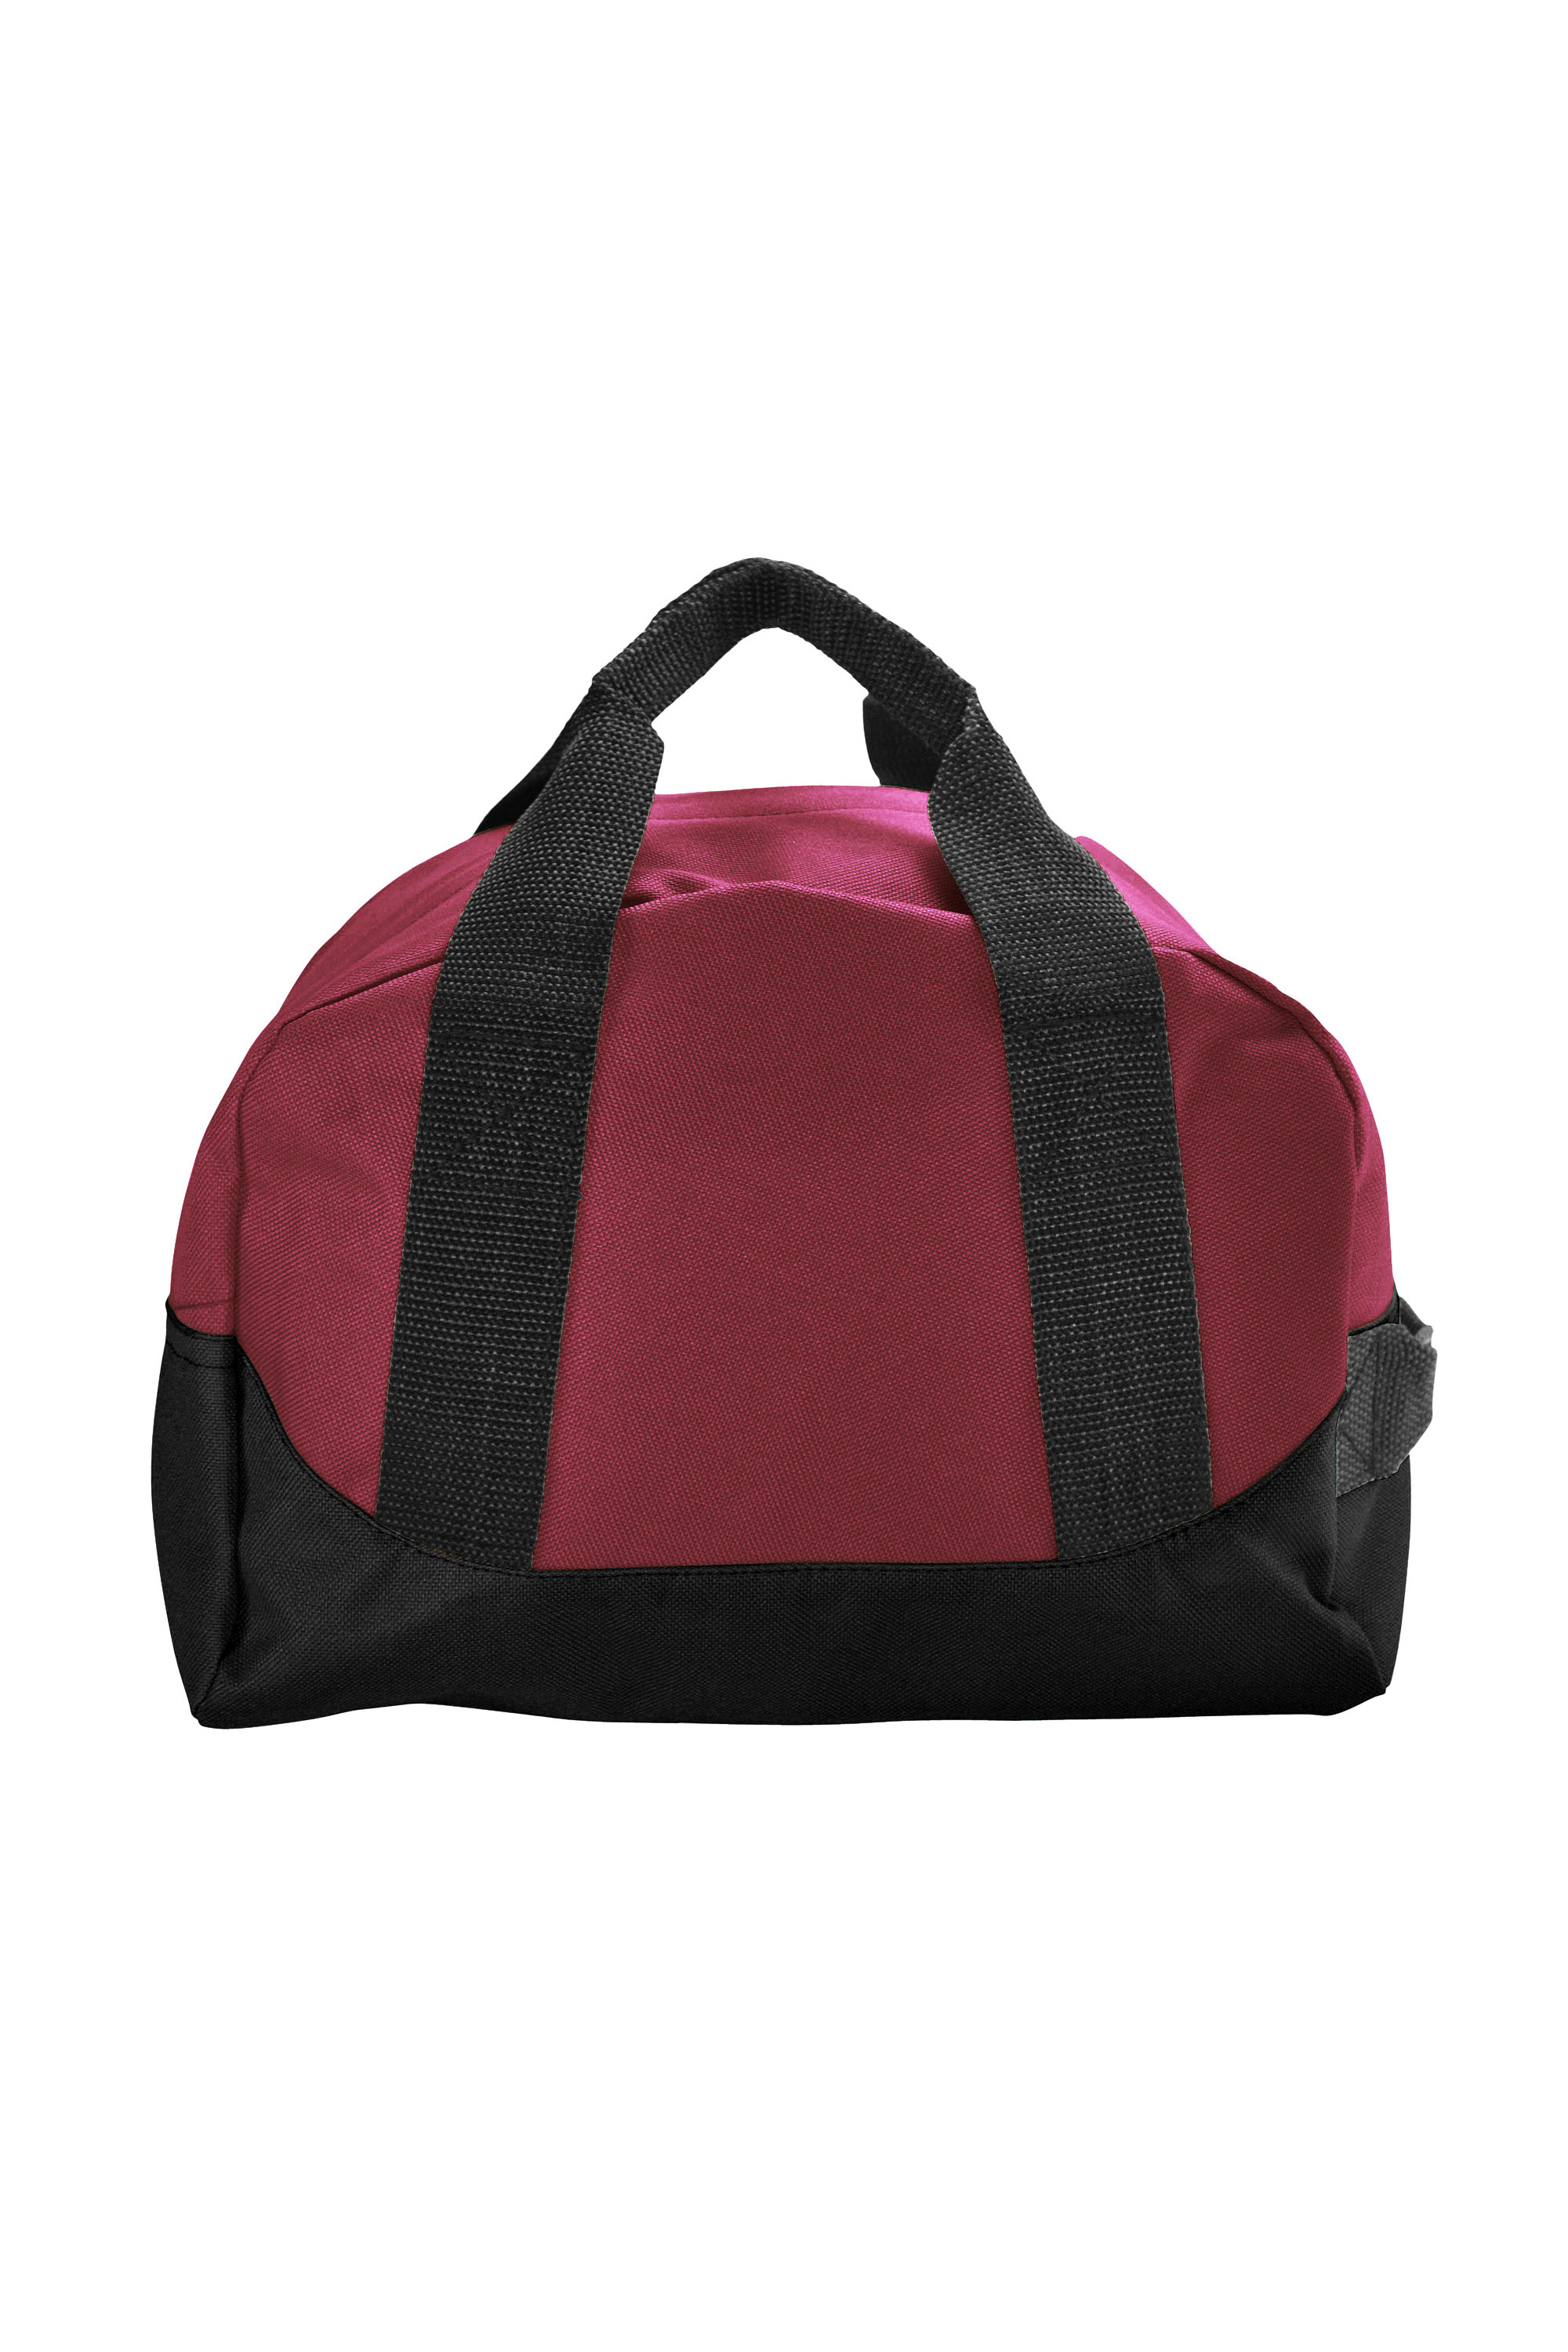 DALIX 12" Mini Duffel Bag Gym Duffle in Maroon - image 5 of 7